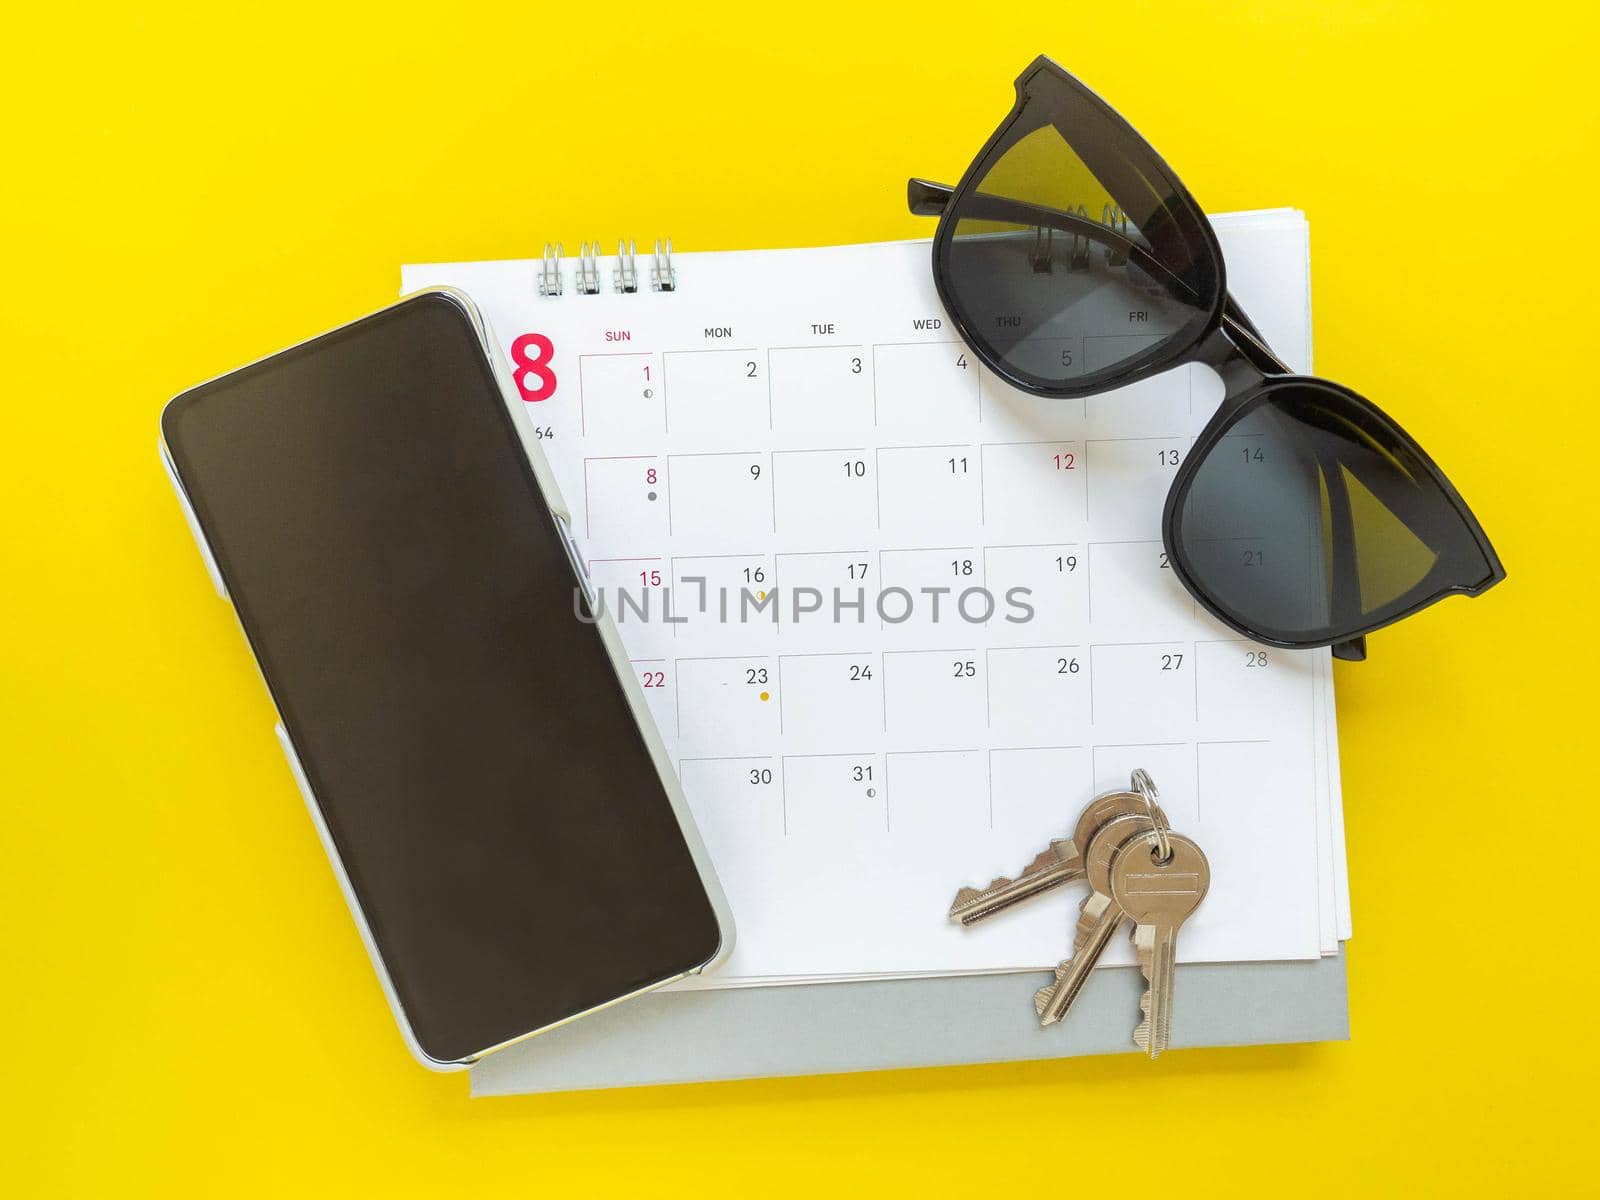 Dark glasses, keys, cell phone, and calendar prepare for departure.